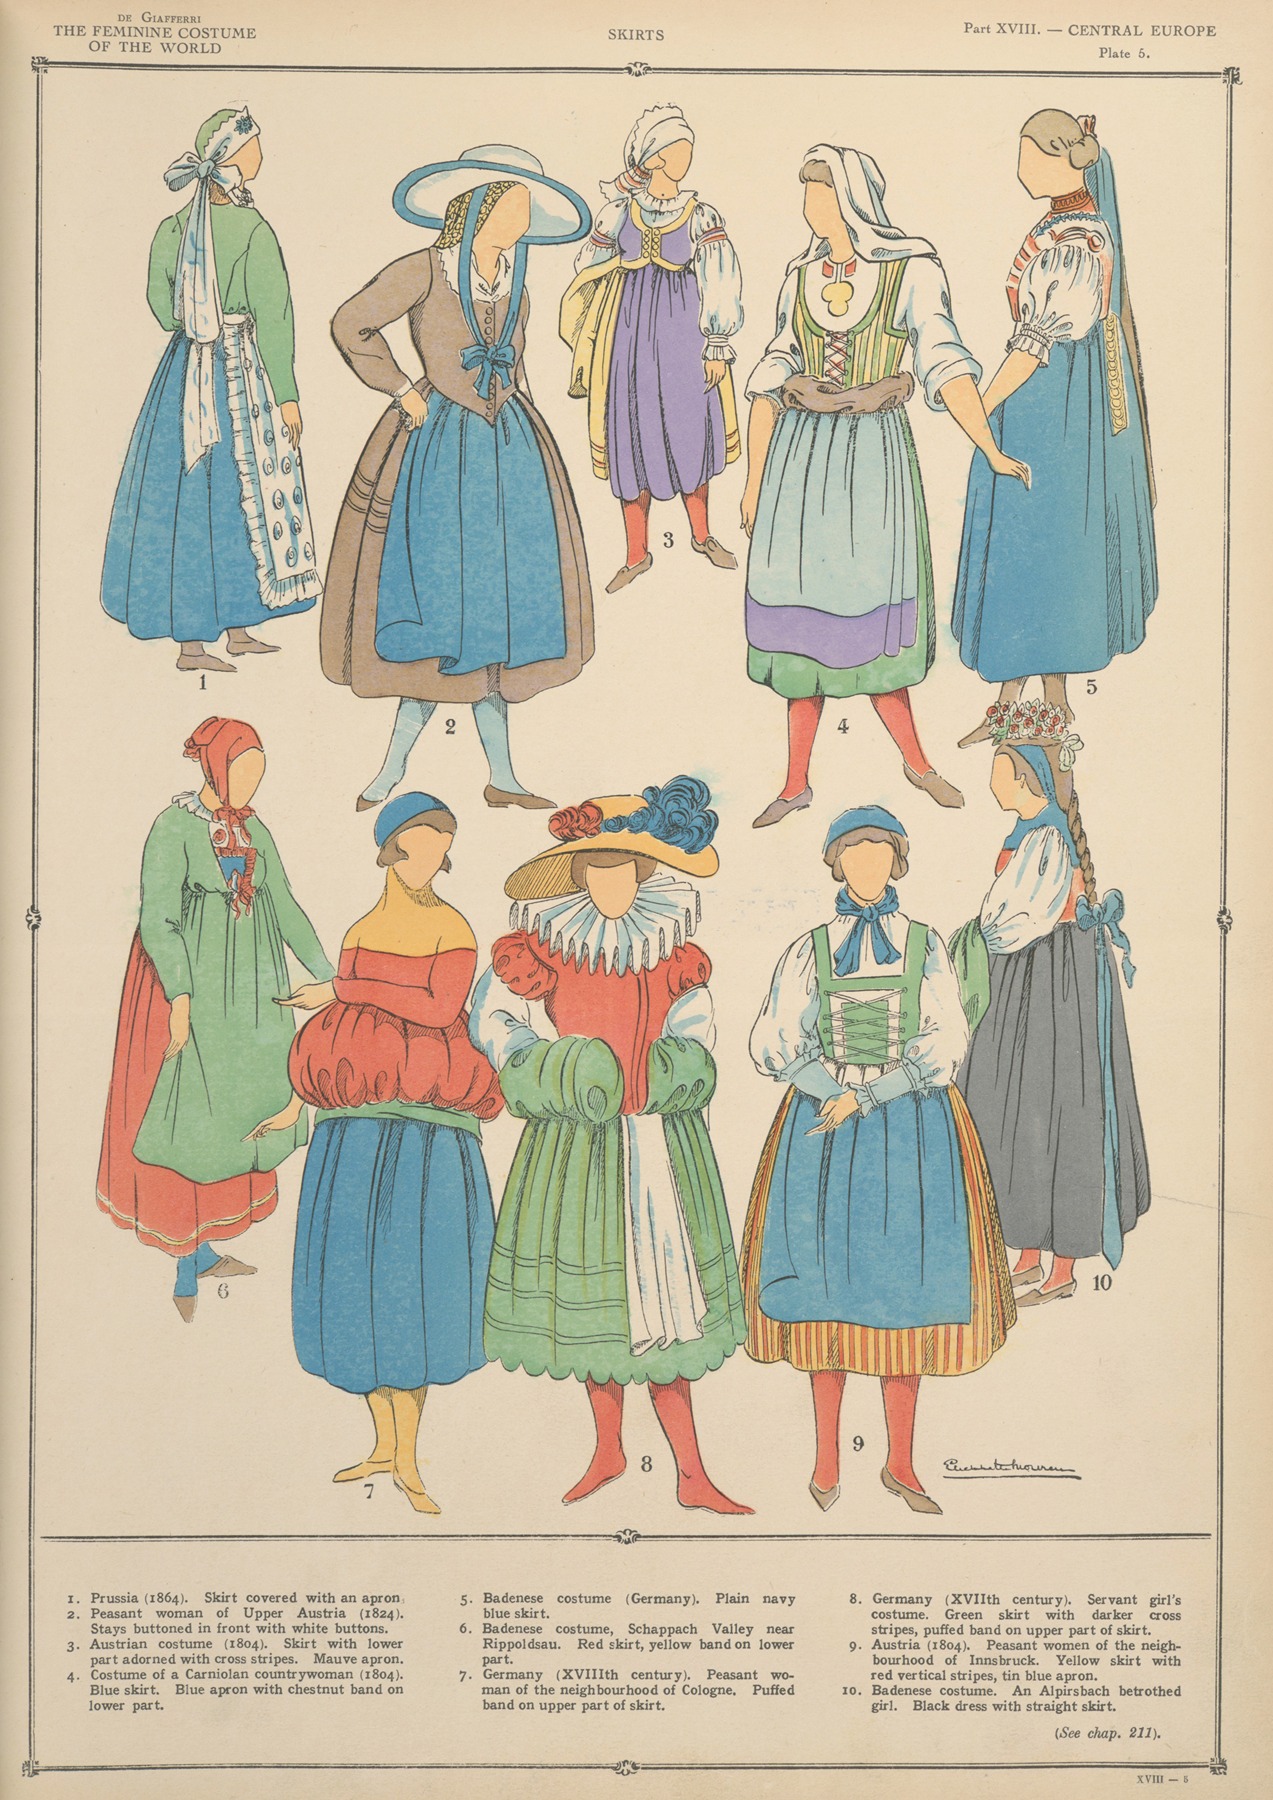 Paul Louis de Giafferri - Central Europe – Skirts